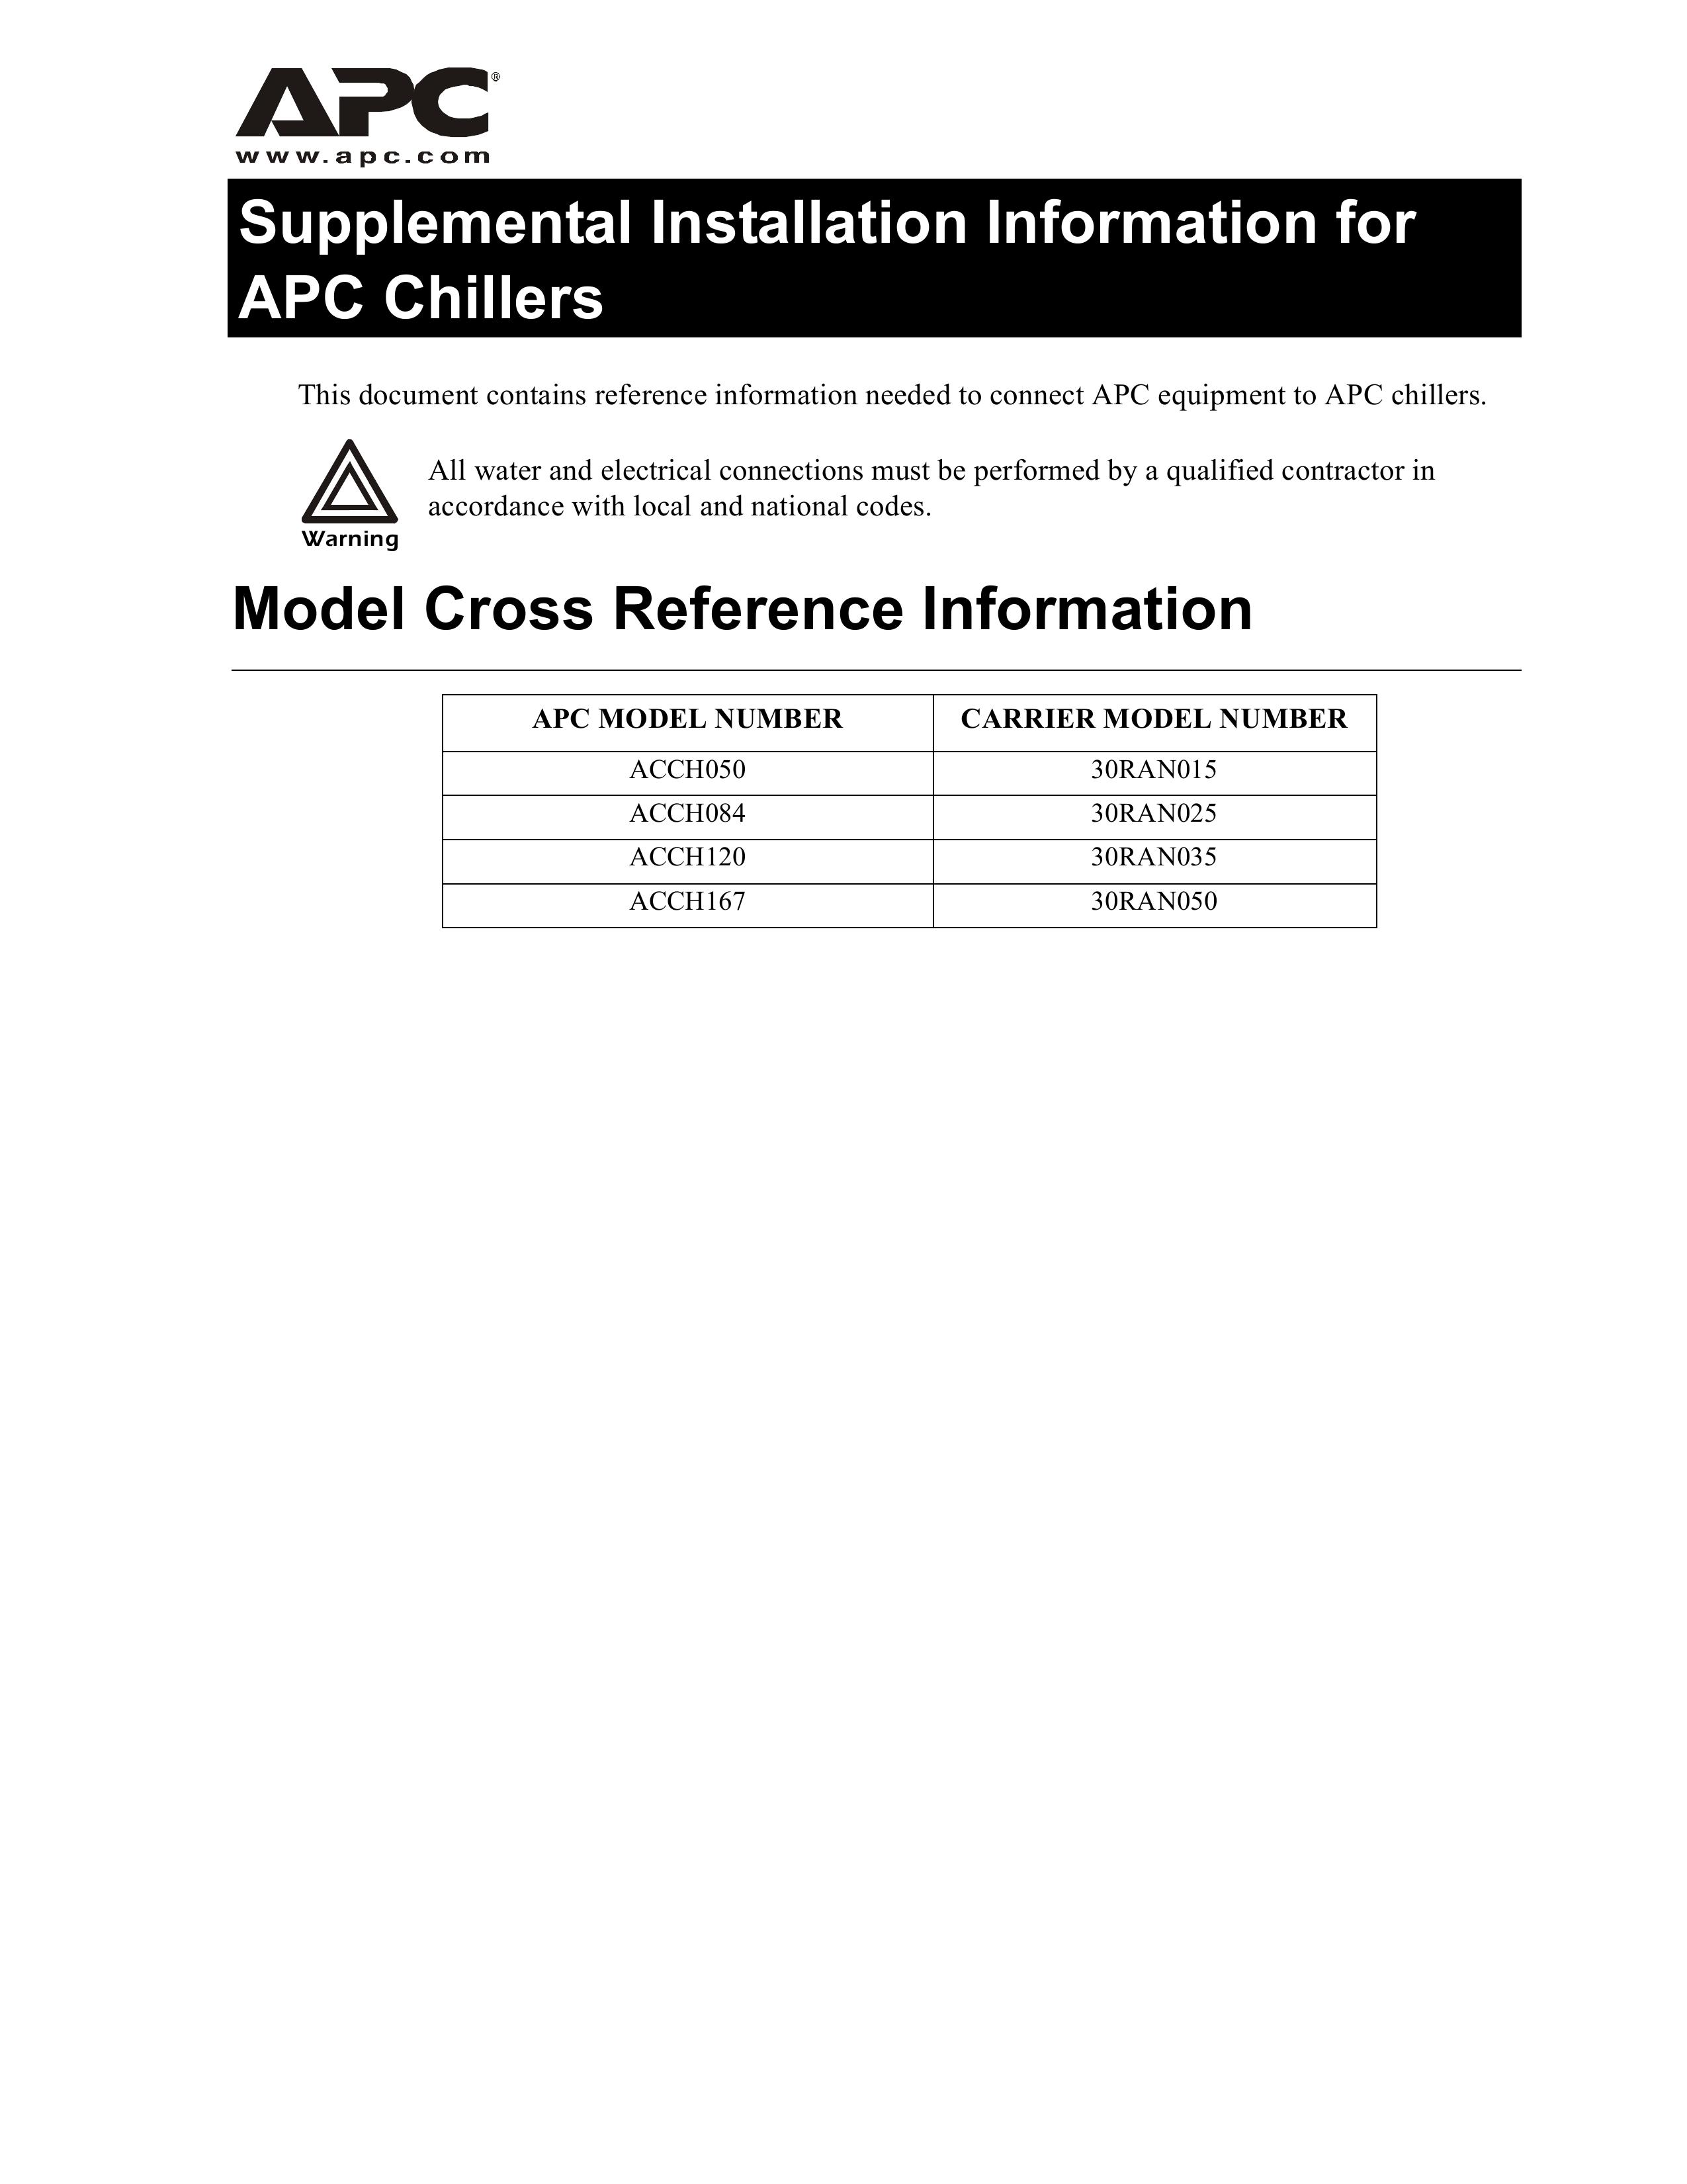 American Power Conversion ACCH120 Refrigerator User Manual